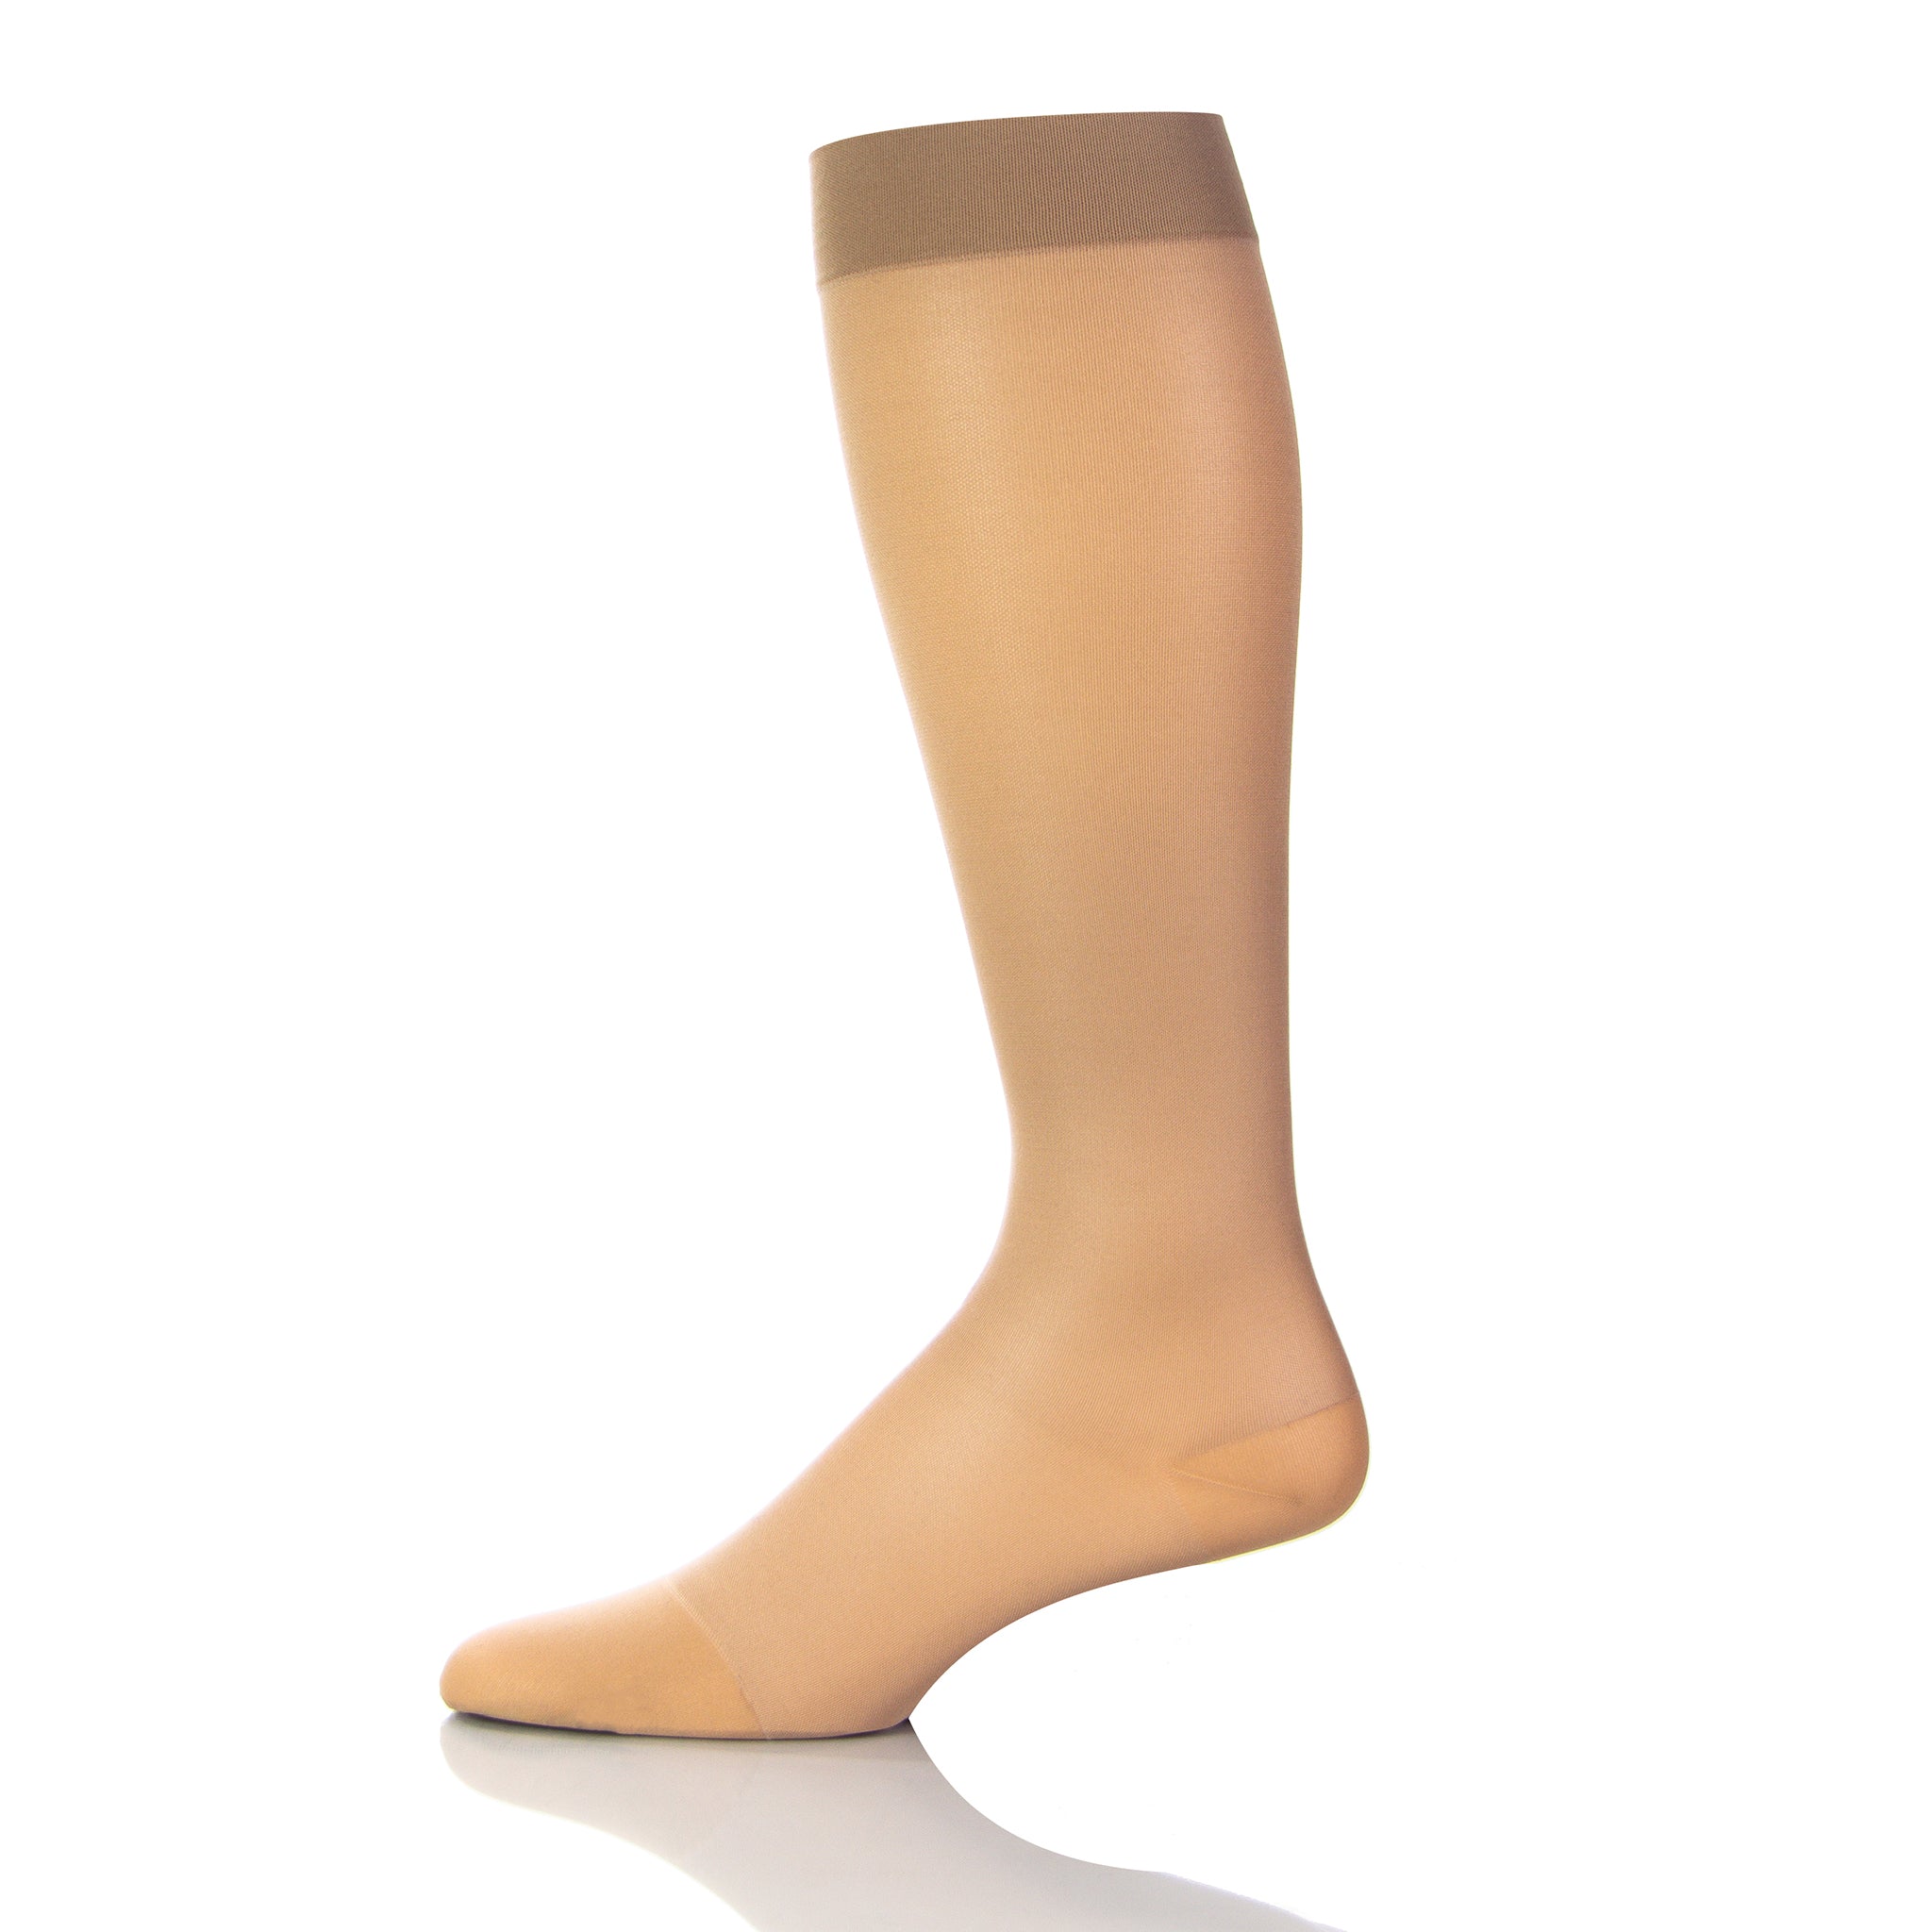 Jobst forMen - Men's Thigh High 20-30mmHg Compression Support Socks